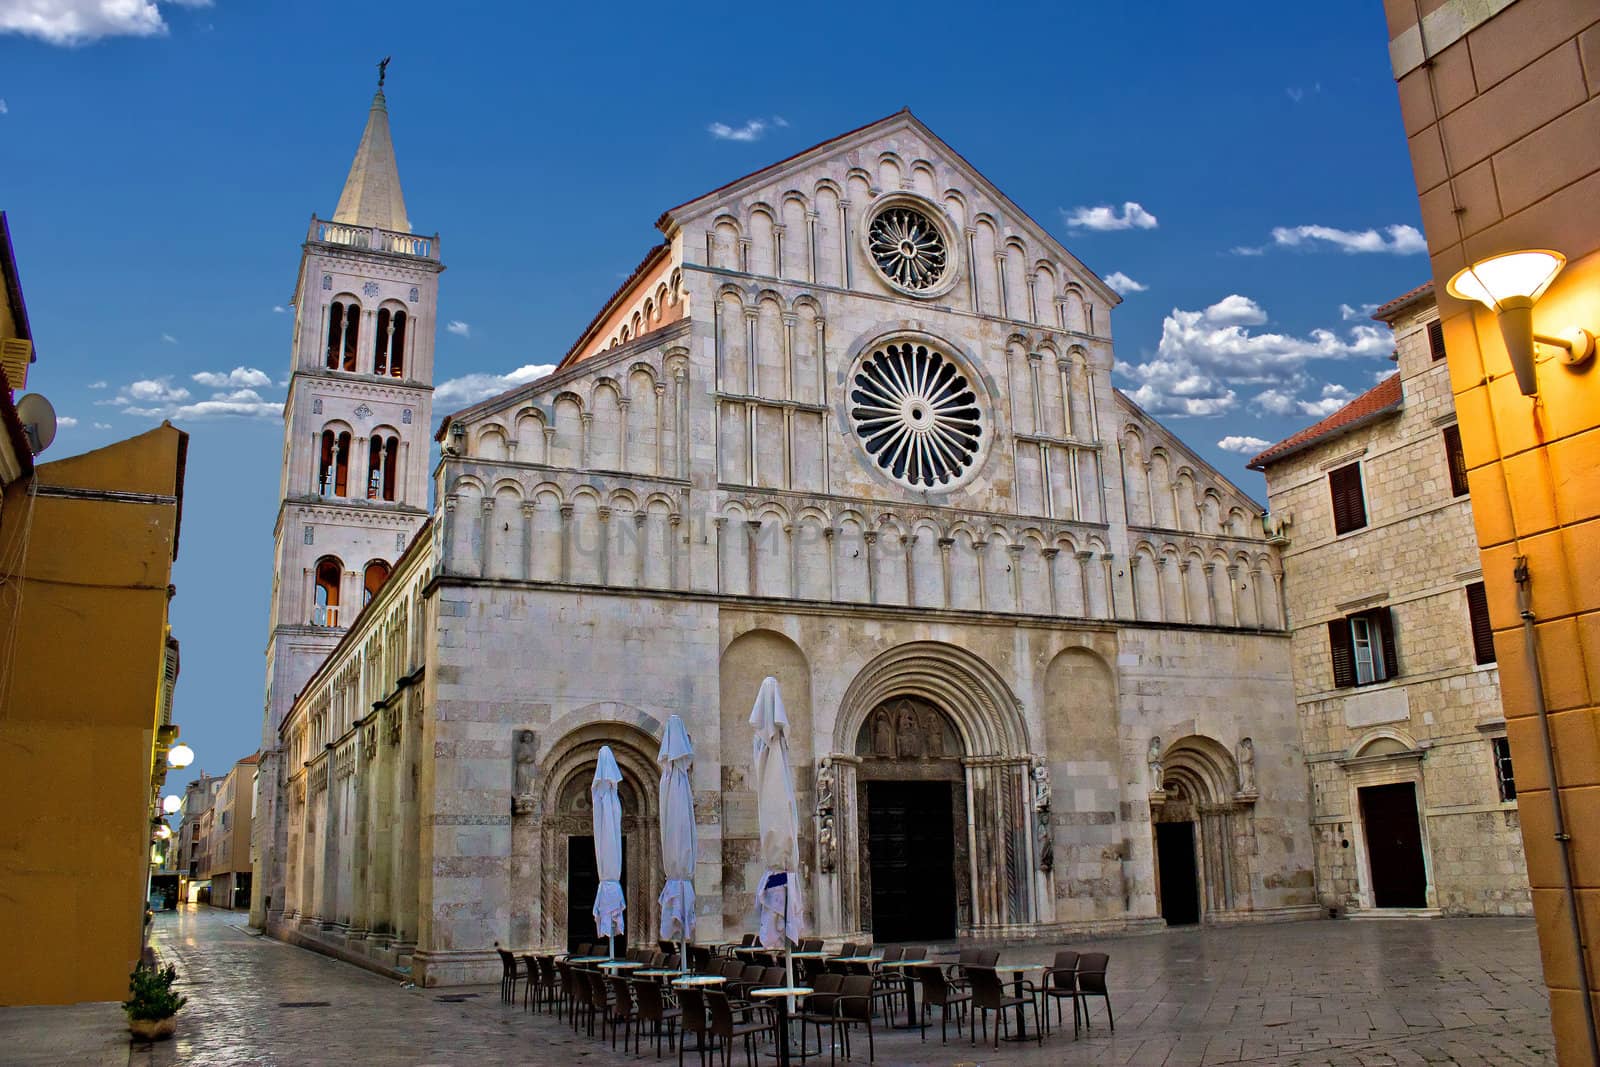 Cathedral of Zadar, Calle larga, Dalmatia, Croatia